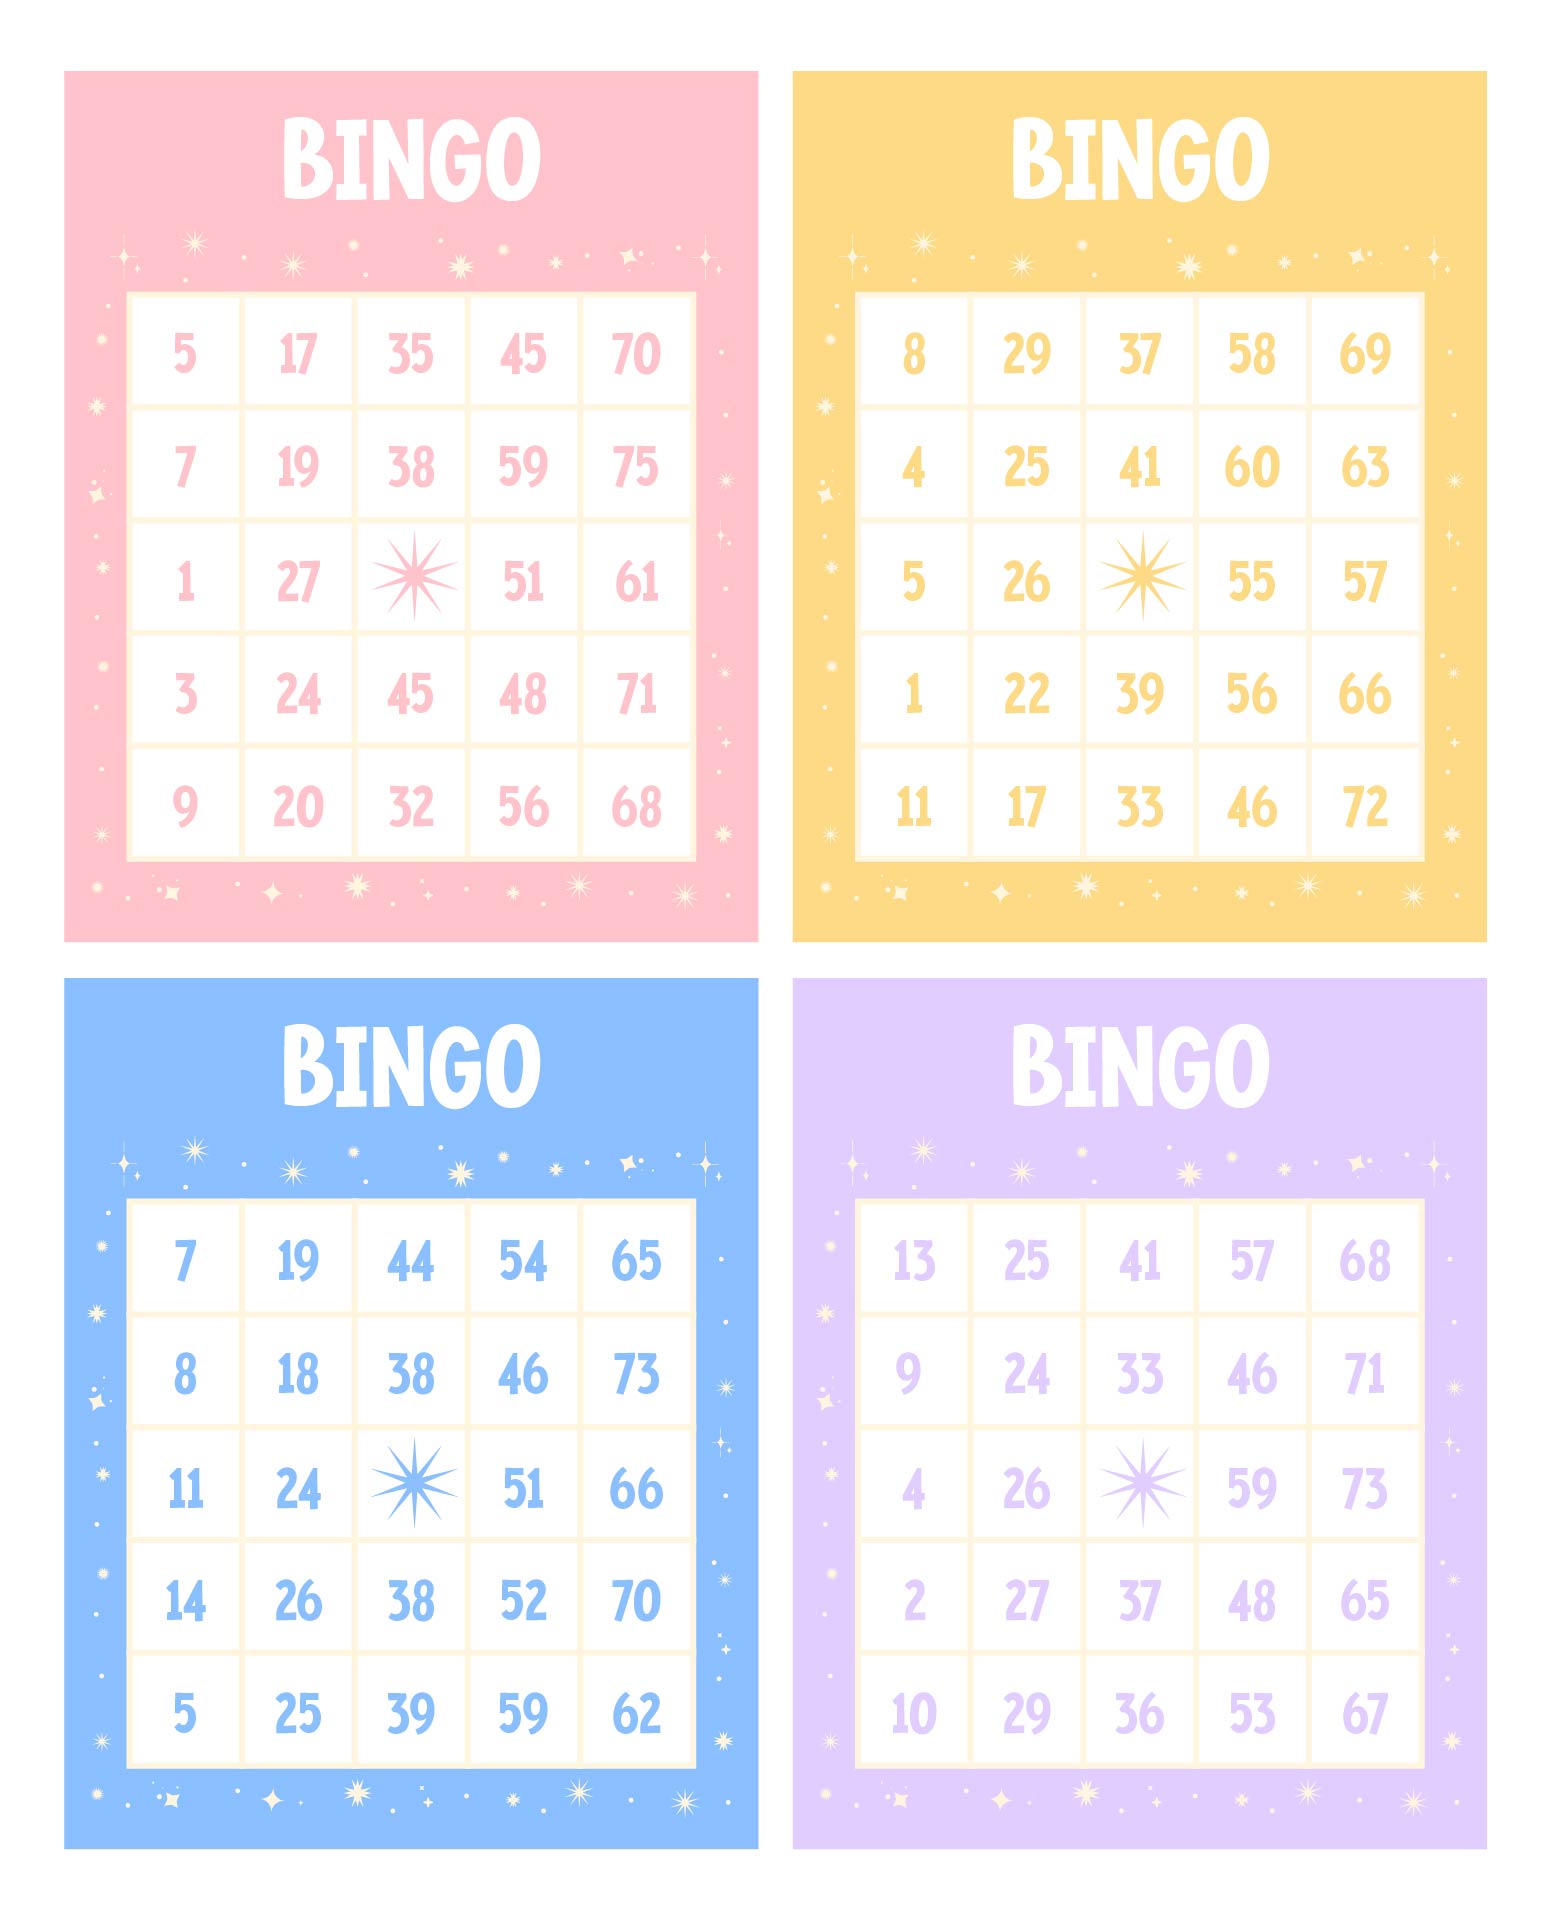 6 Best Images of Paper Bingo Sheets Printable - Paper Bingo Sheets